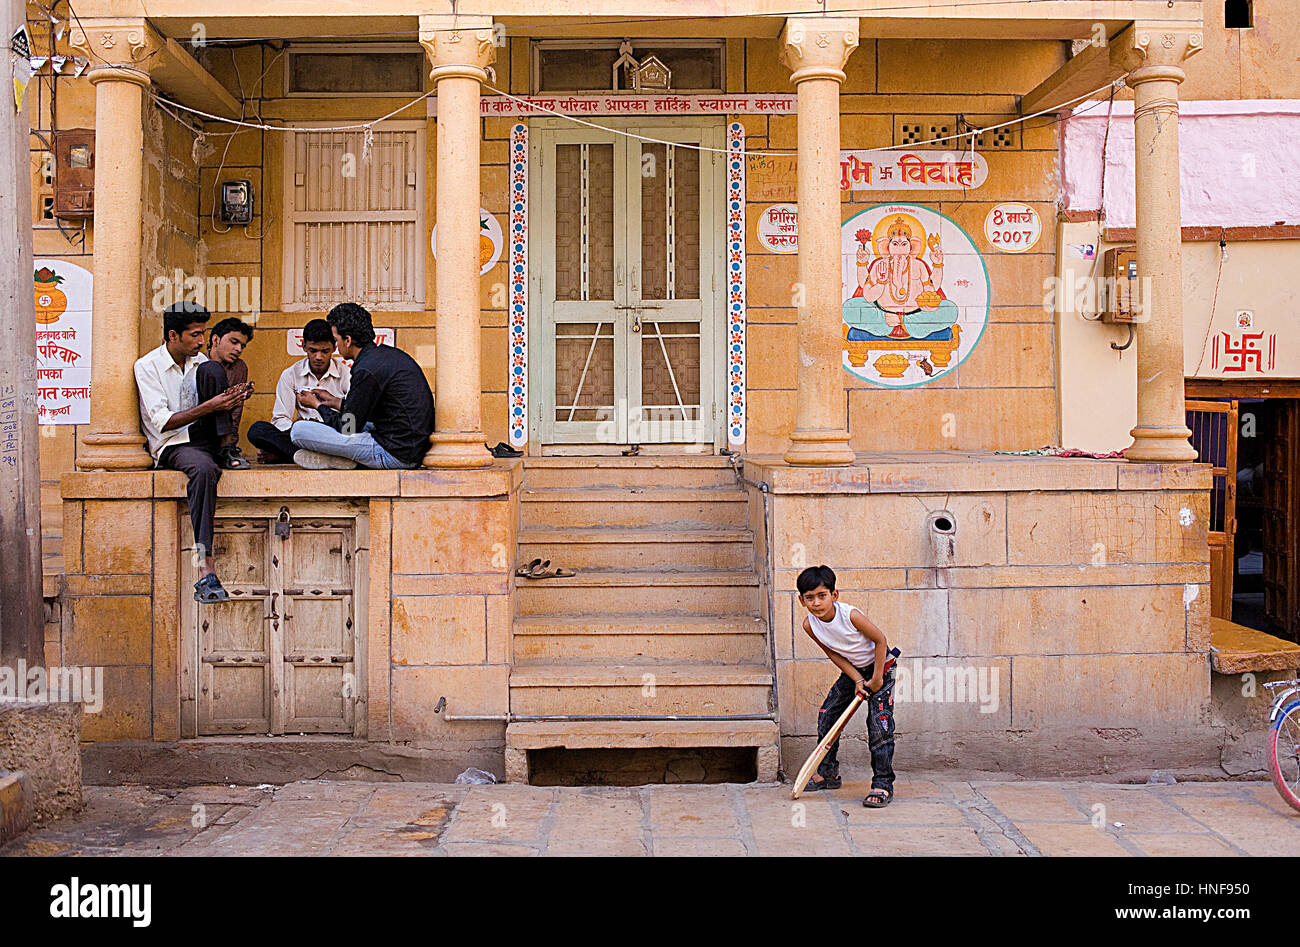 Man playing cards and Boy playing cricket, Street scene,Jaisalmer, Rajasthan, India Stock Photo